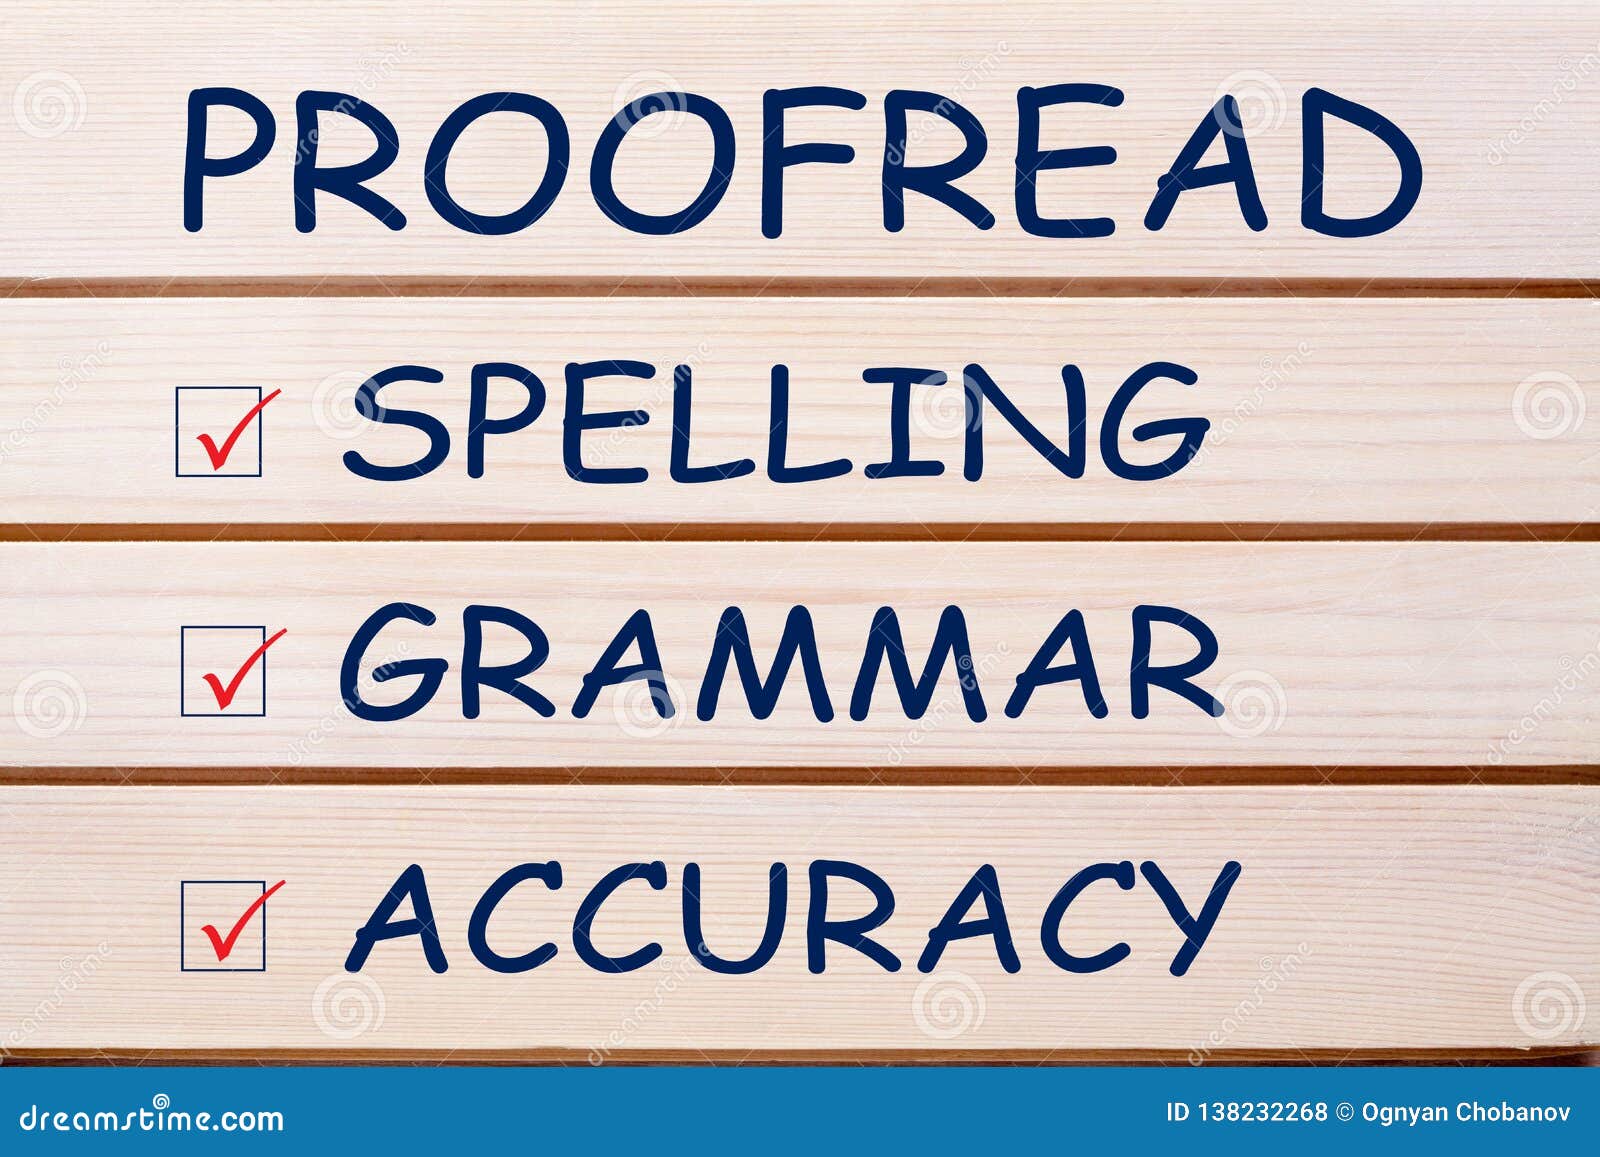 proofread spelling grammar accuracy